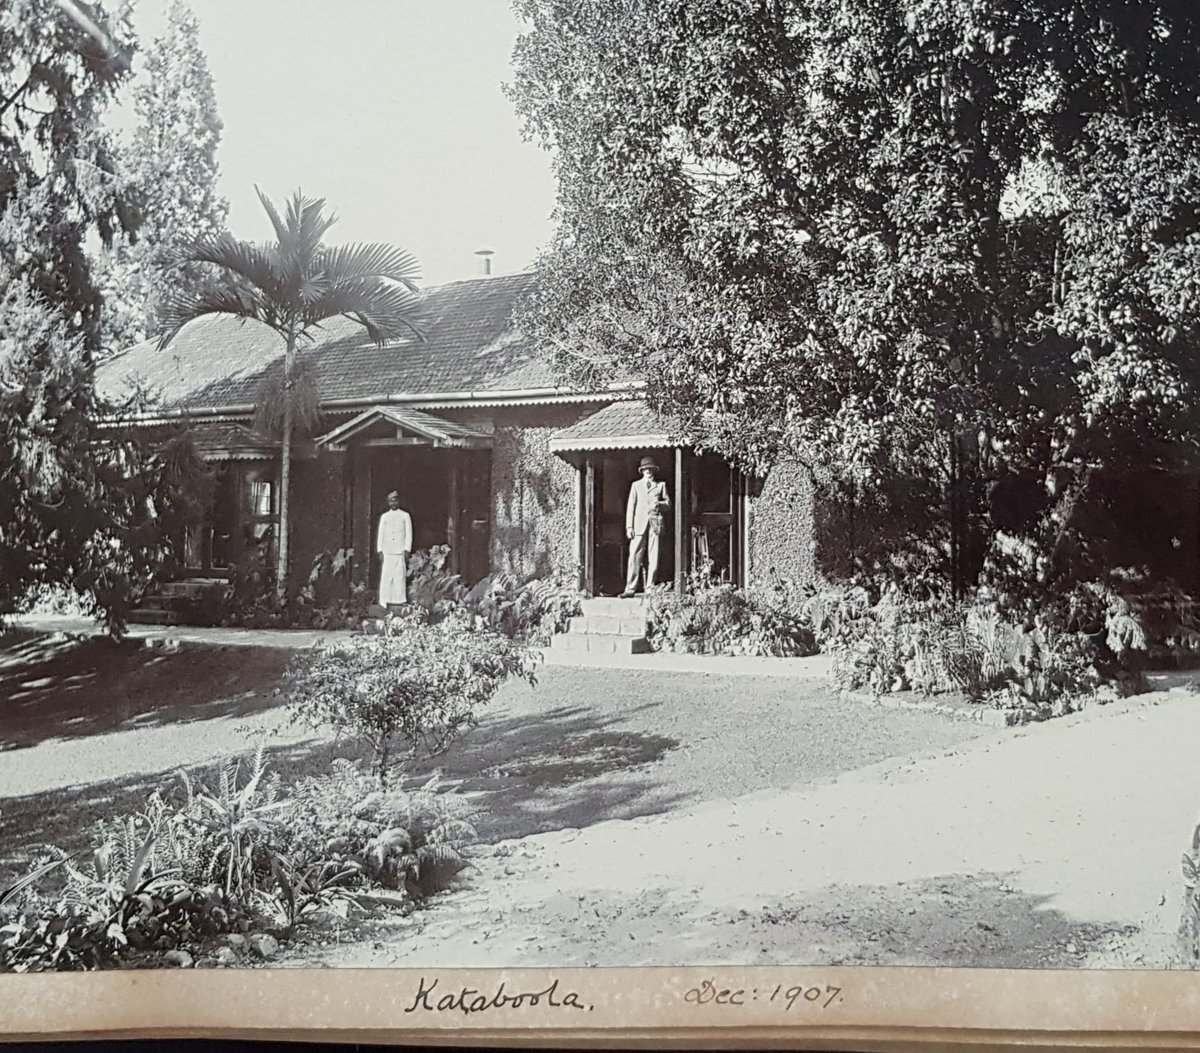 Kataboola! December 1907!

#History #SriLanka #Ceylon